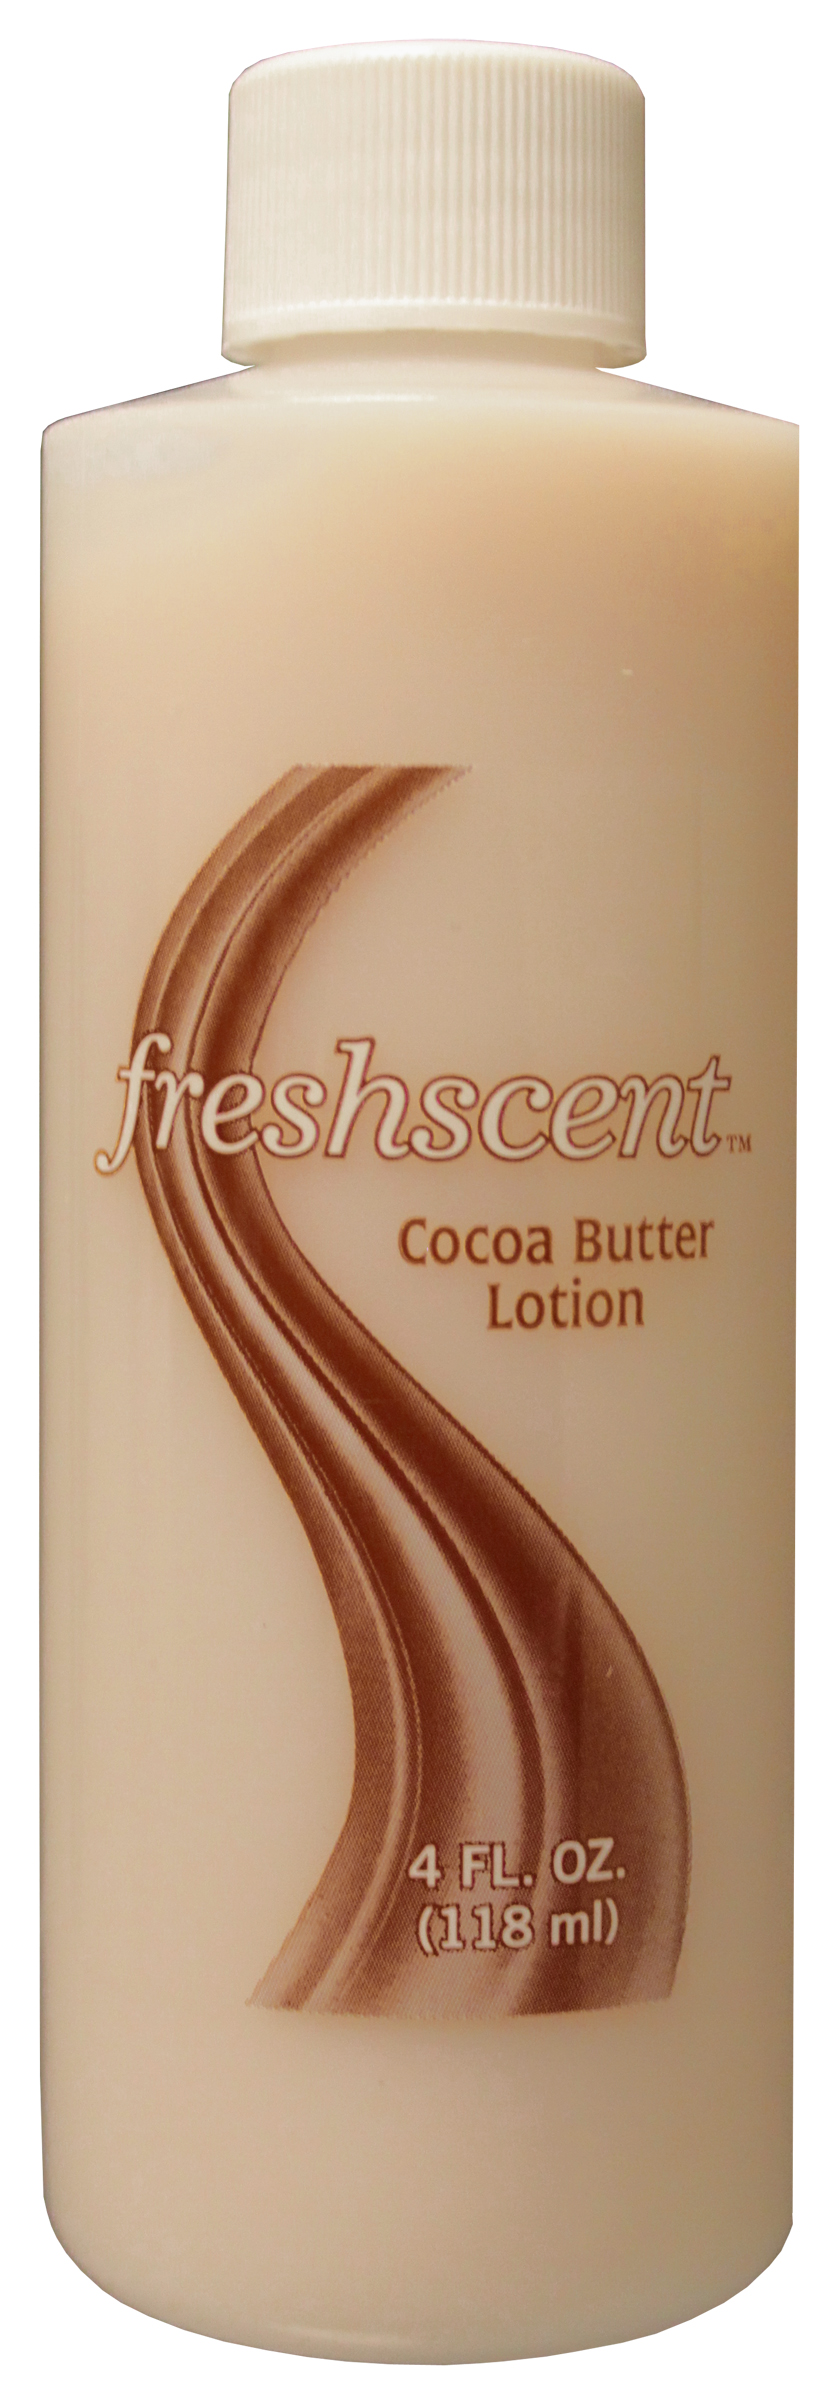 Freshscent 4 oz. Cocoa Butter LOTION